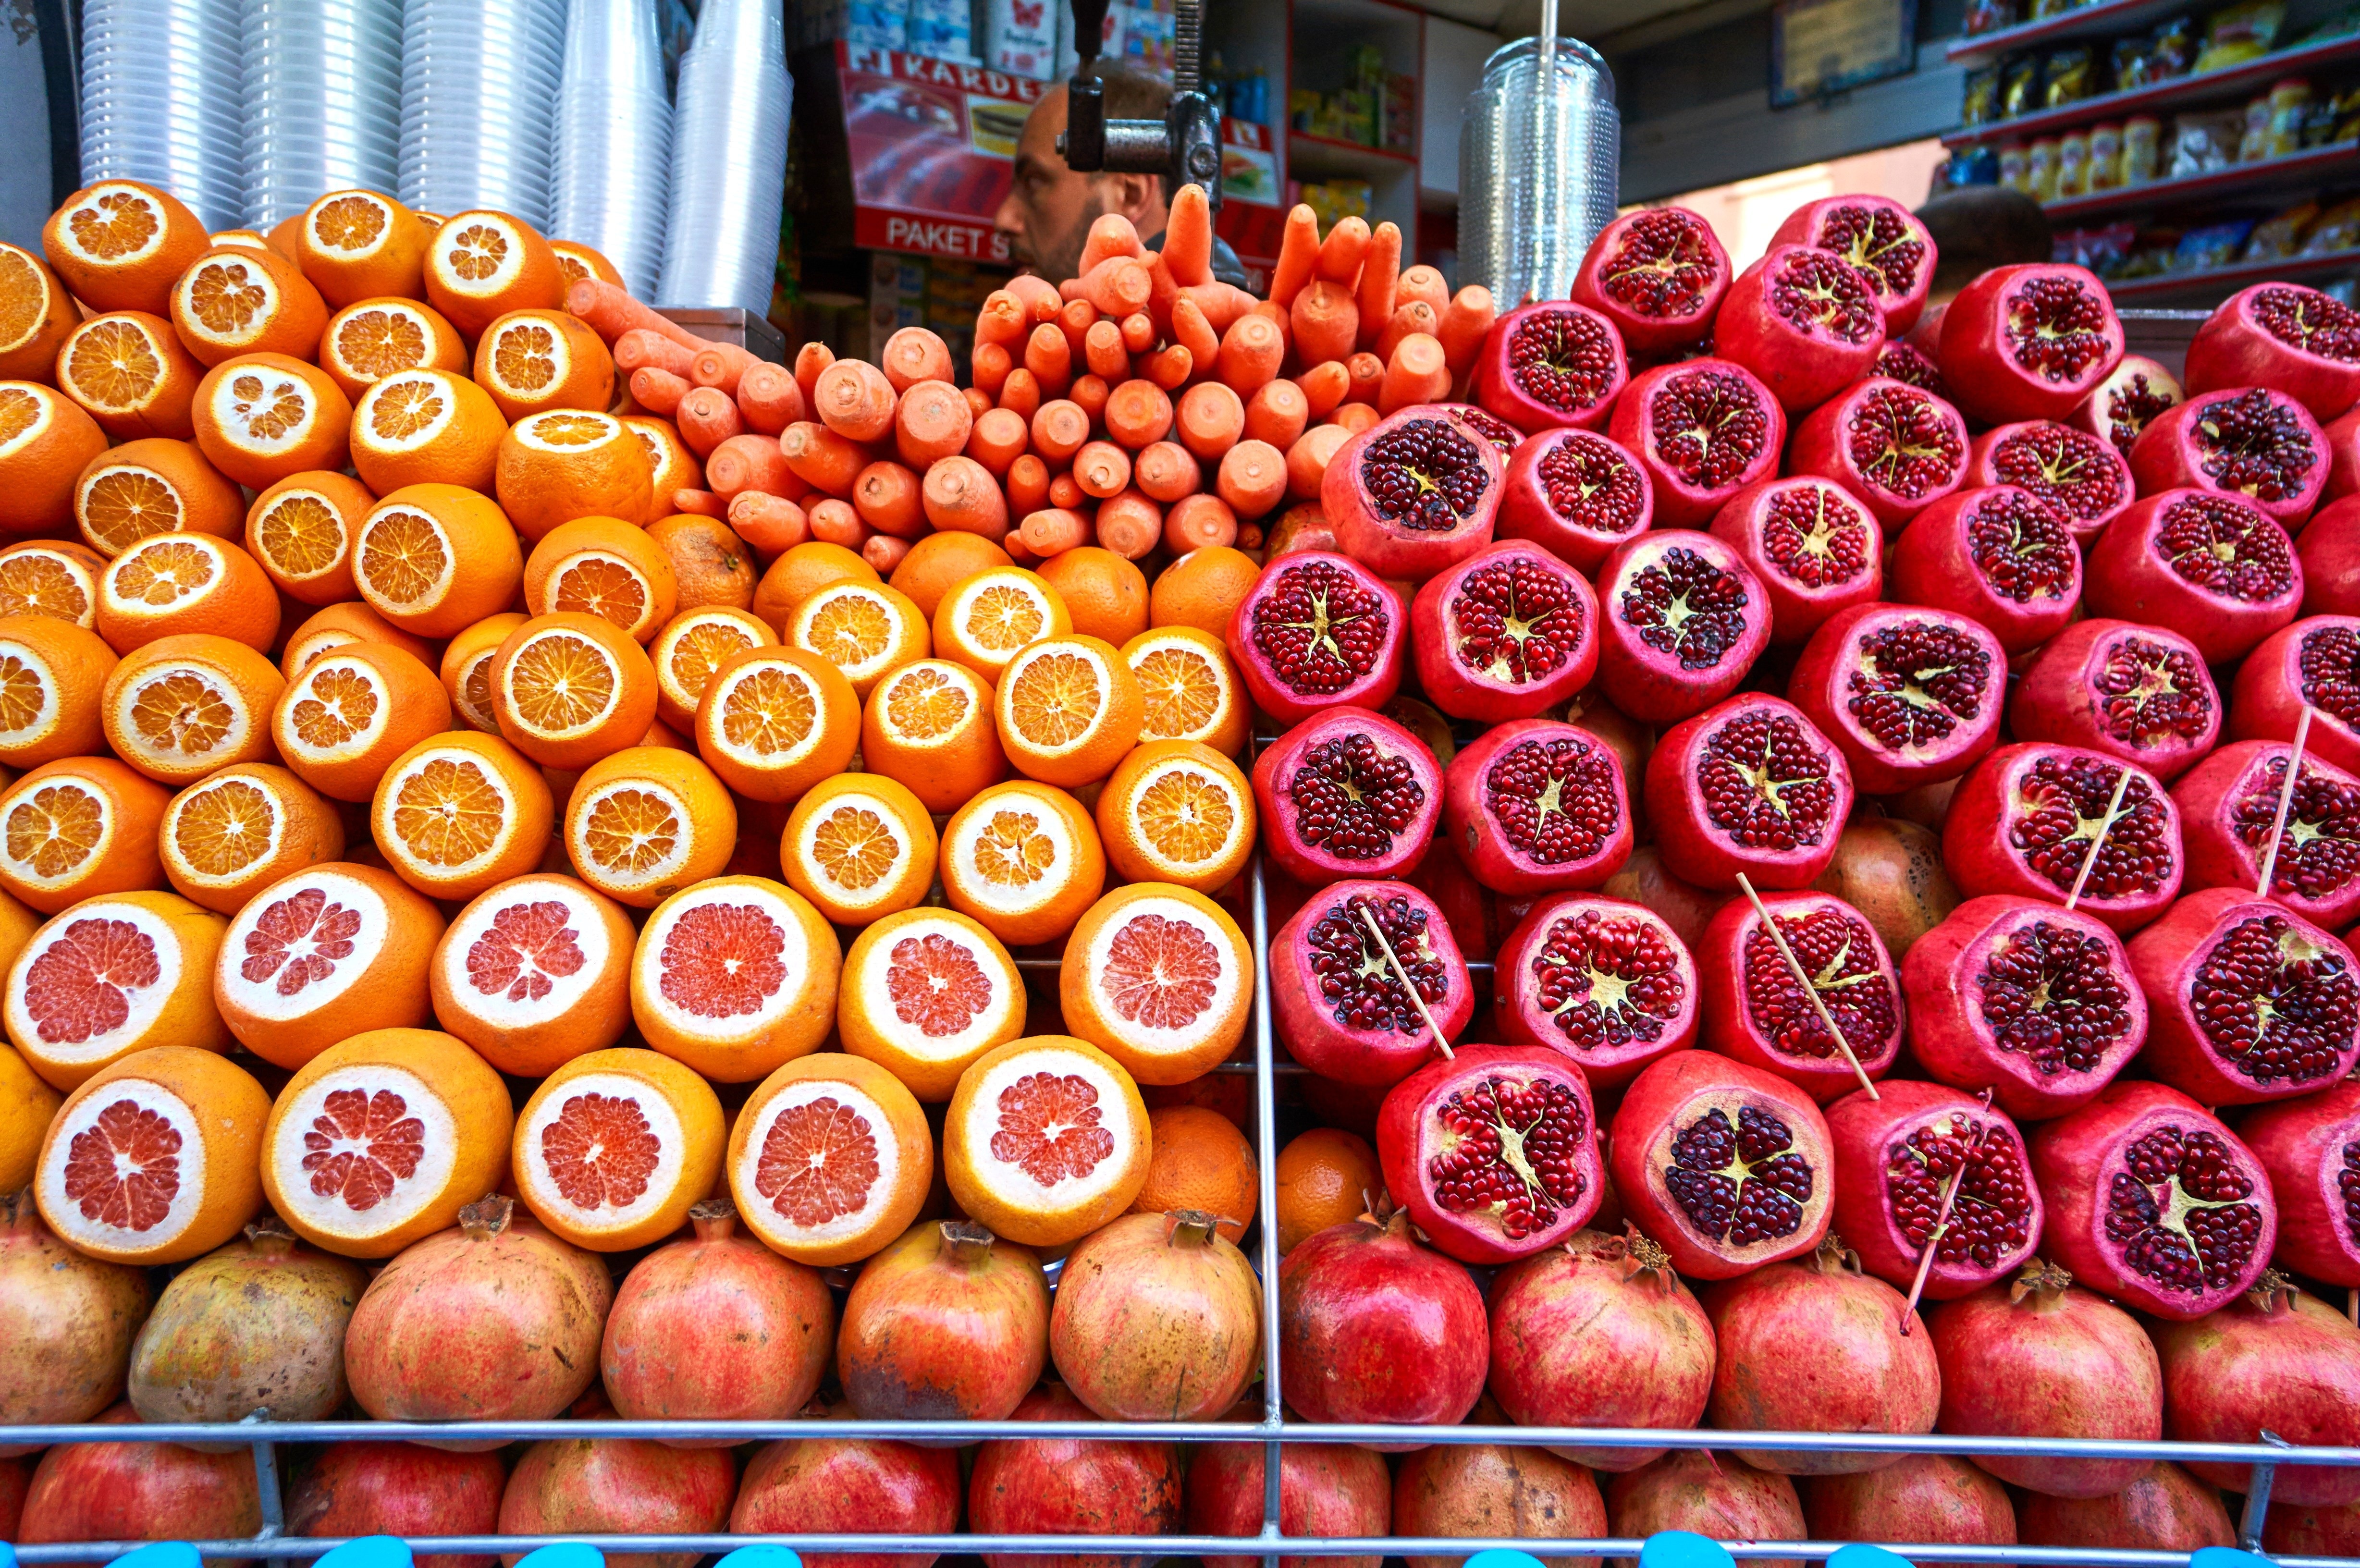 orange and red round fruits